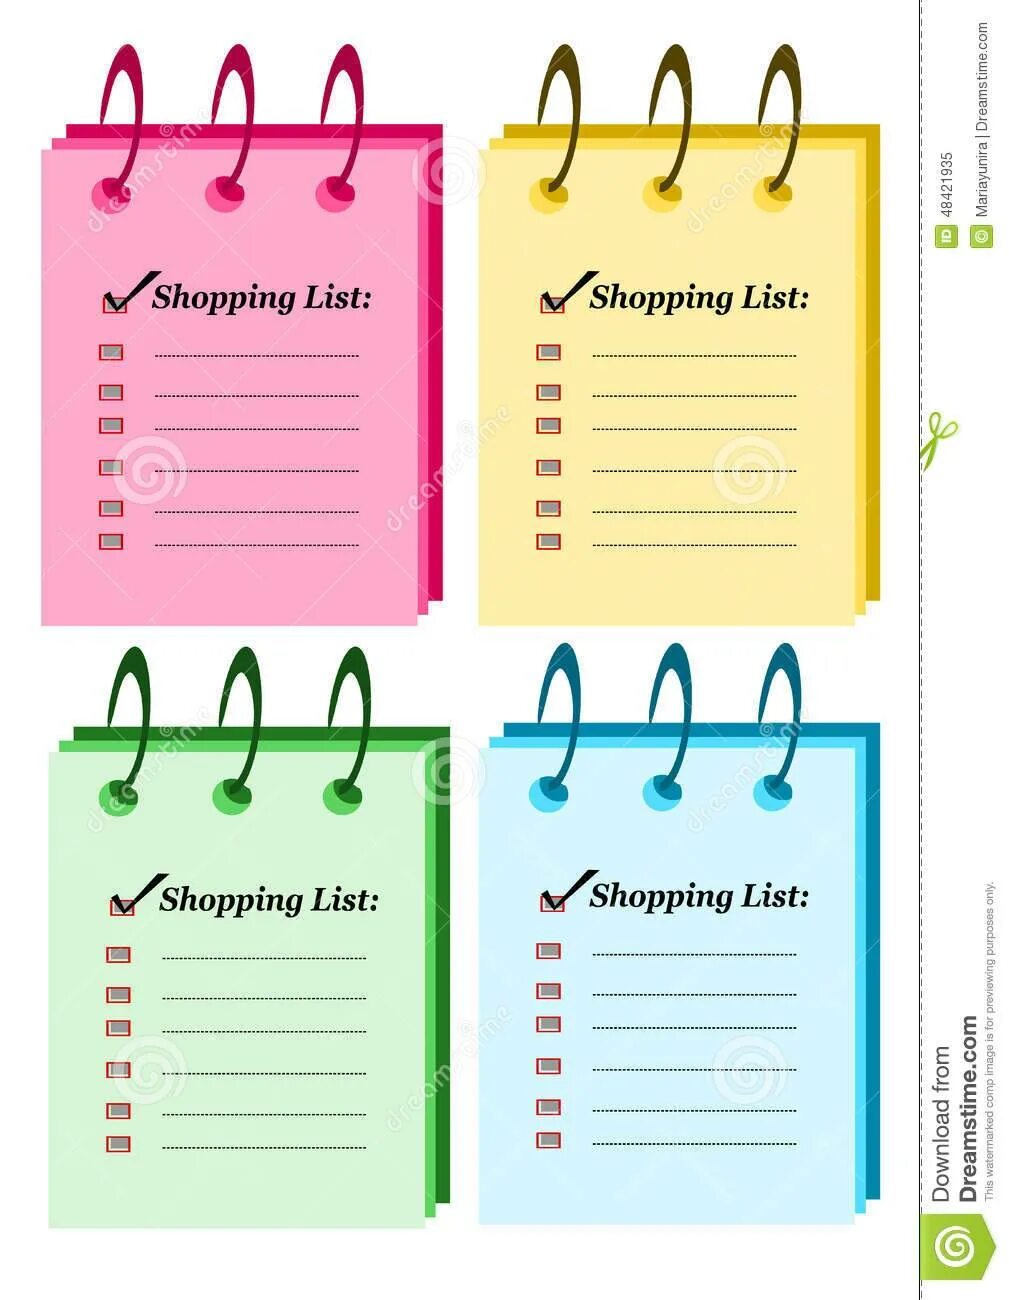 Shopping list. Список покупок. Shopping list шаблон. Список покупок рисунок. My mum shopping list